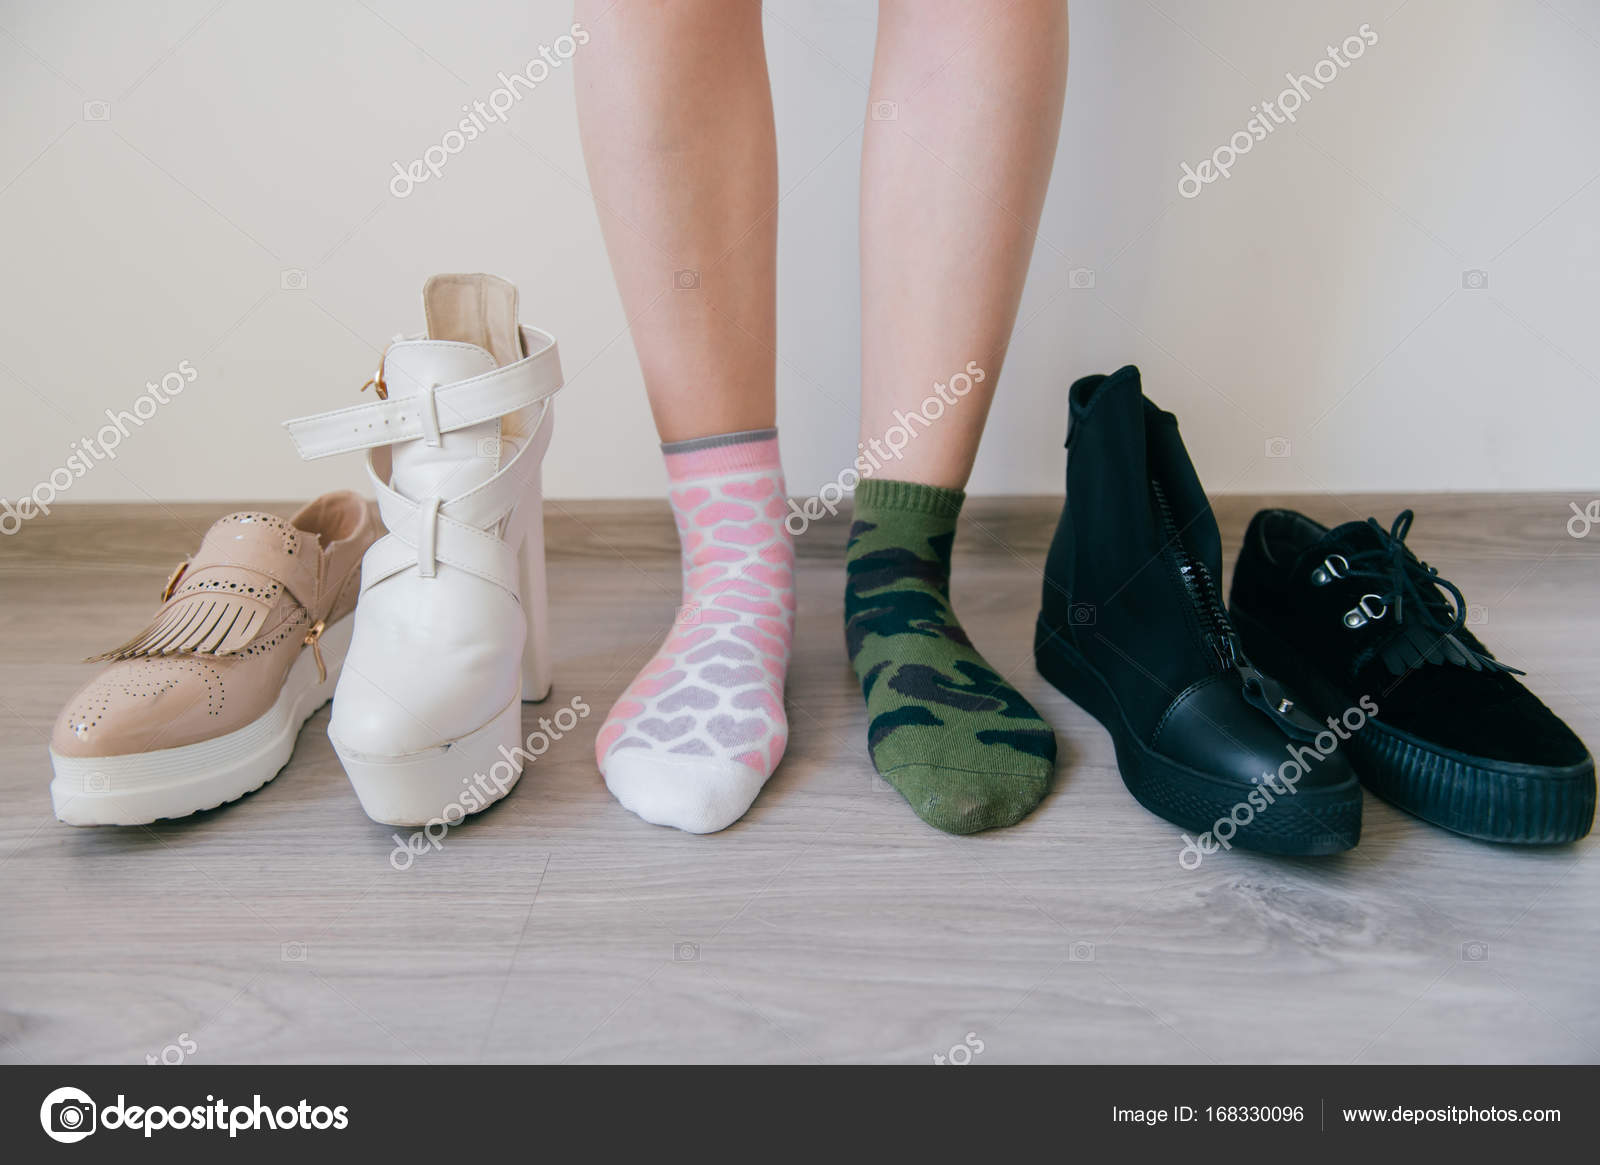 Female naked legs standing on floor. Women`s feet in missmatched cotton